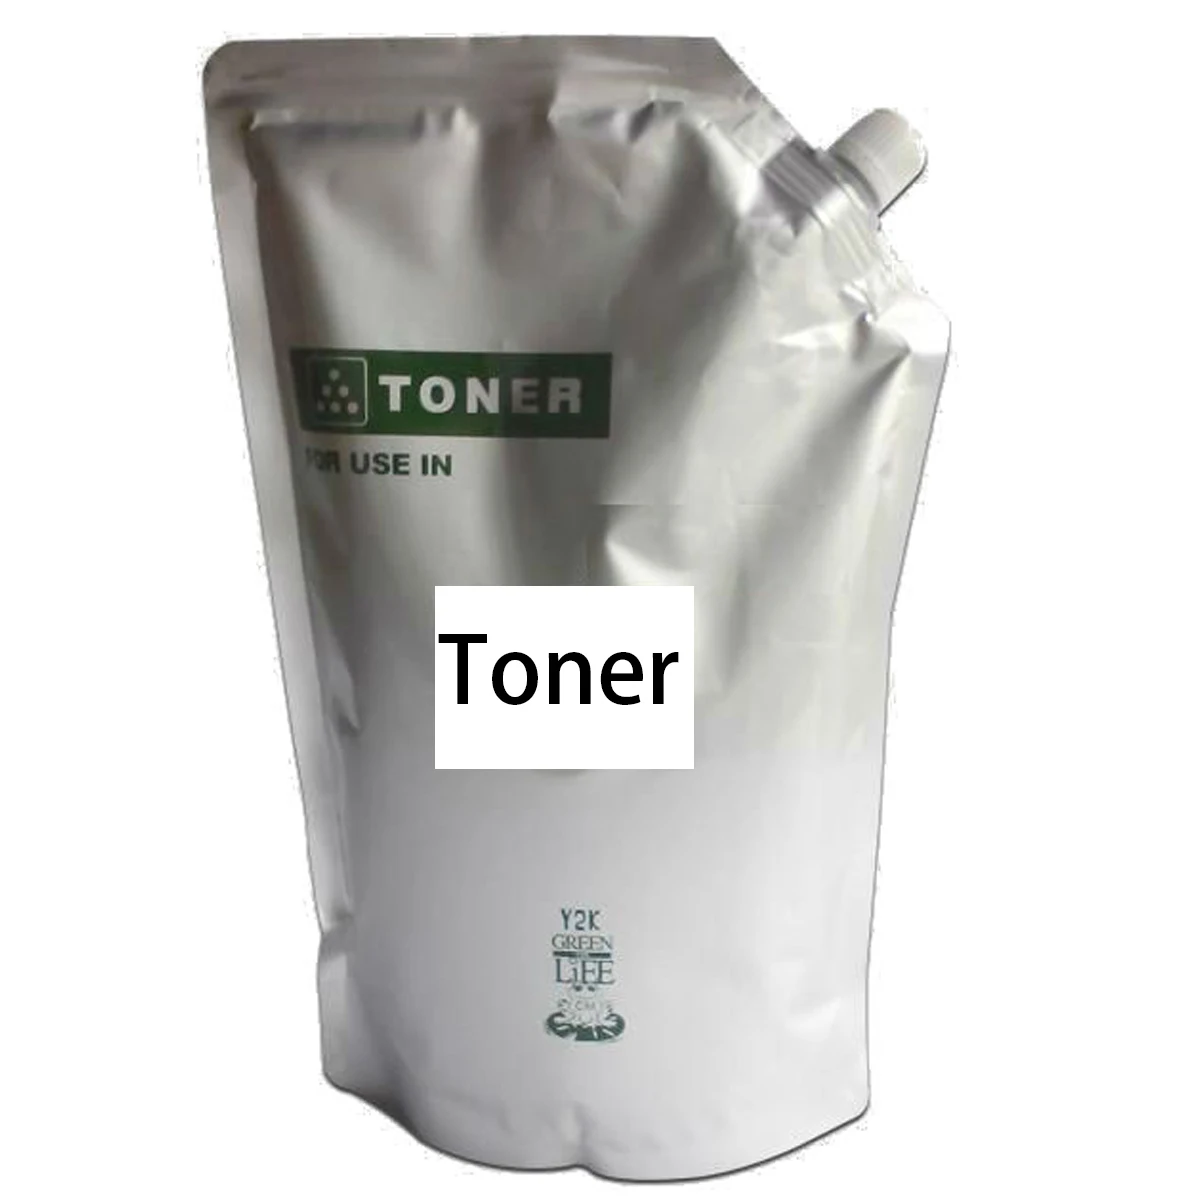 Тонер порошок. Тонер пудра. Тонер порошок /1000 гр/. Порошок для заправки тонер Bost. Тонер for use in EPL 5200.